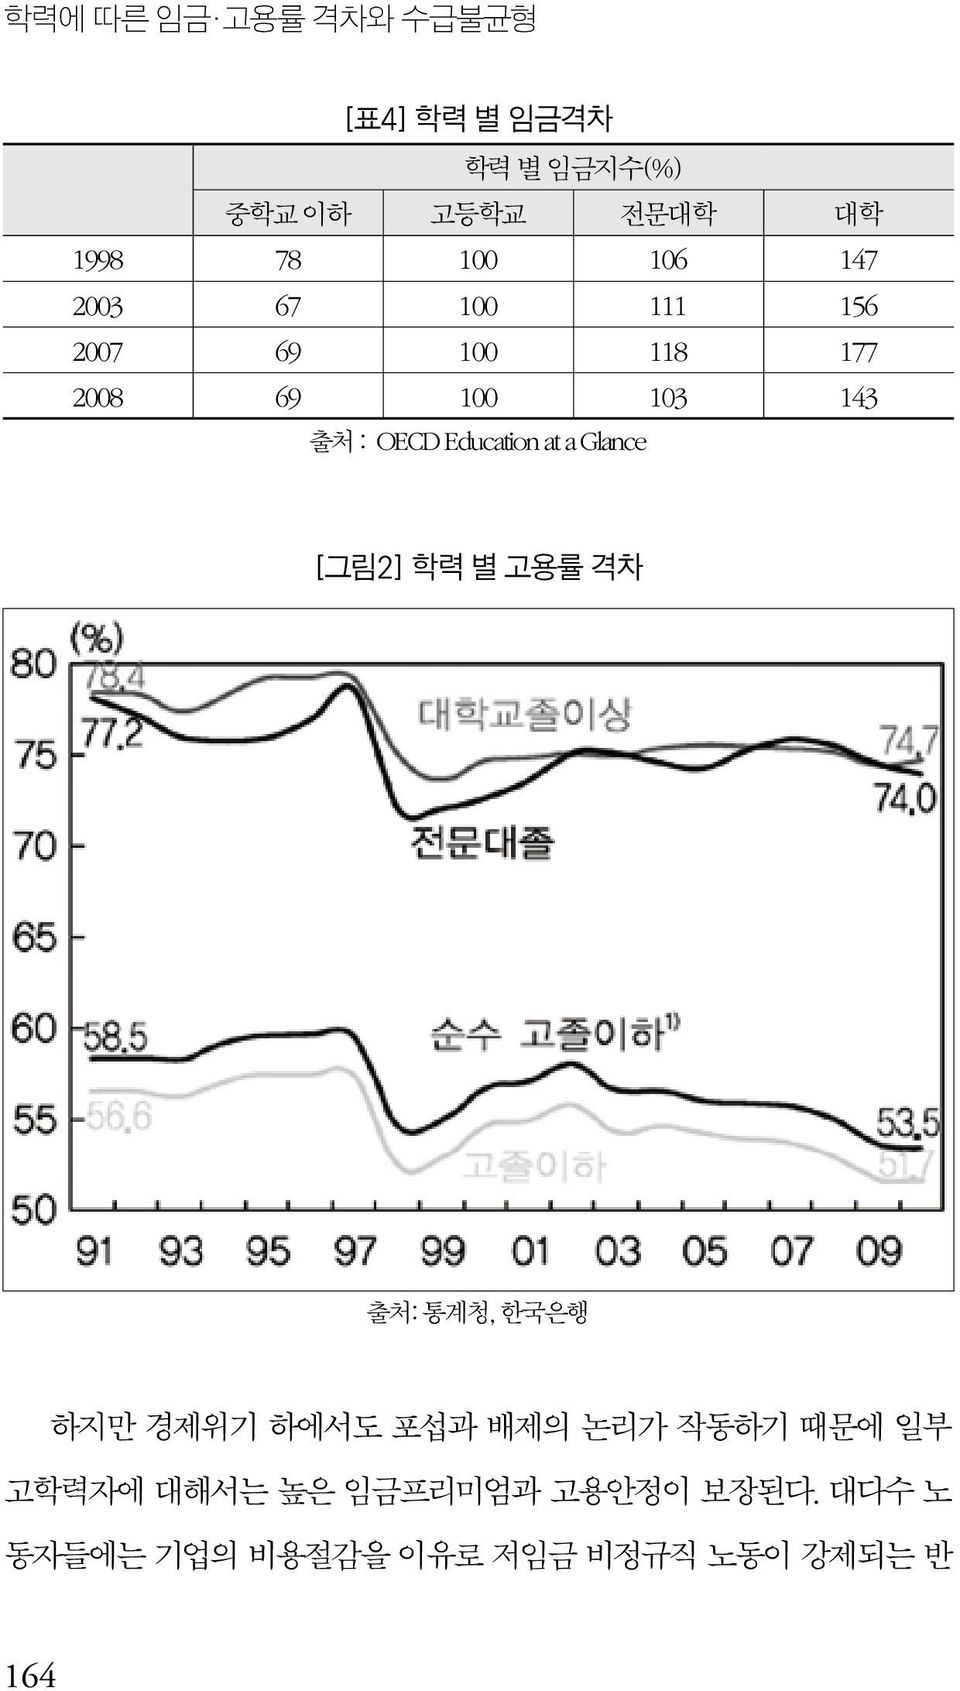 Education at a Glance [그림2] 학력 별 고용률 격차 출처: 통계청, 한국은행 하지만 경제위기 하에서도 포섭과 배제의 논리가